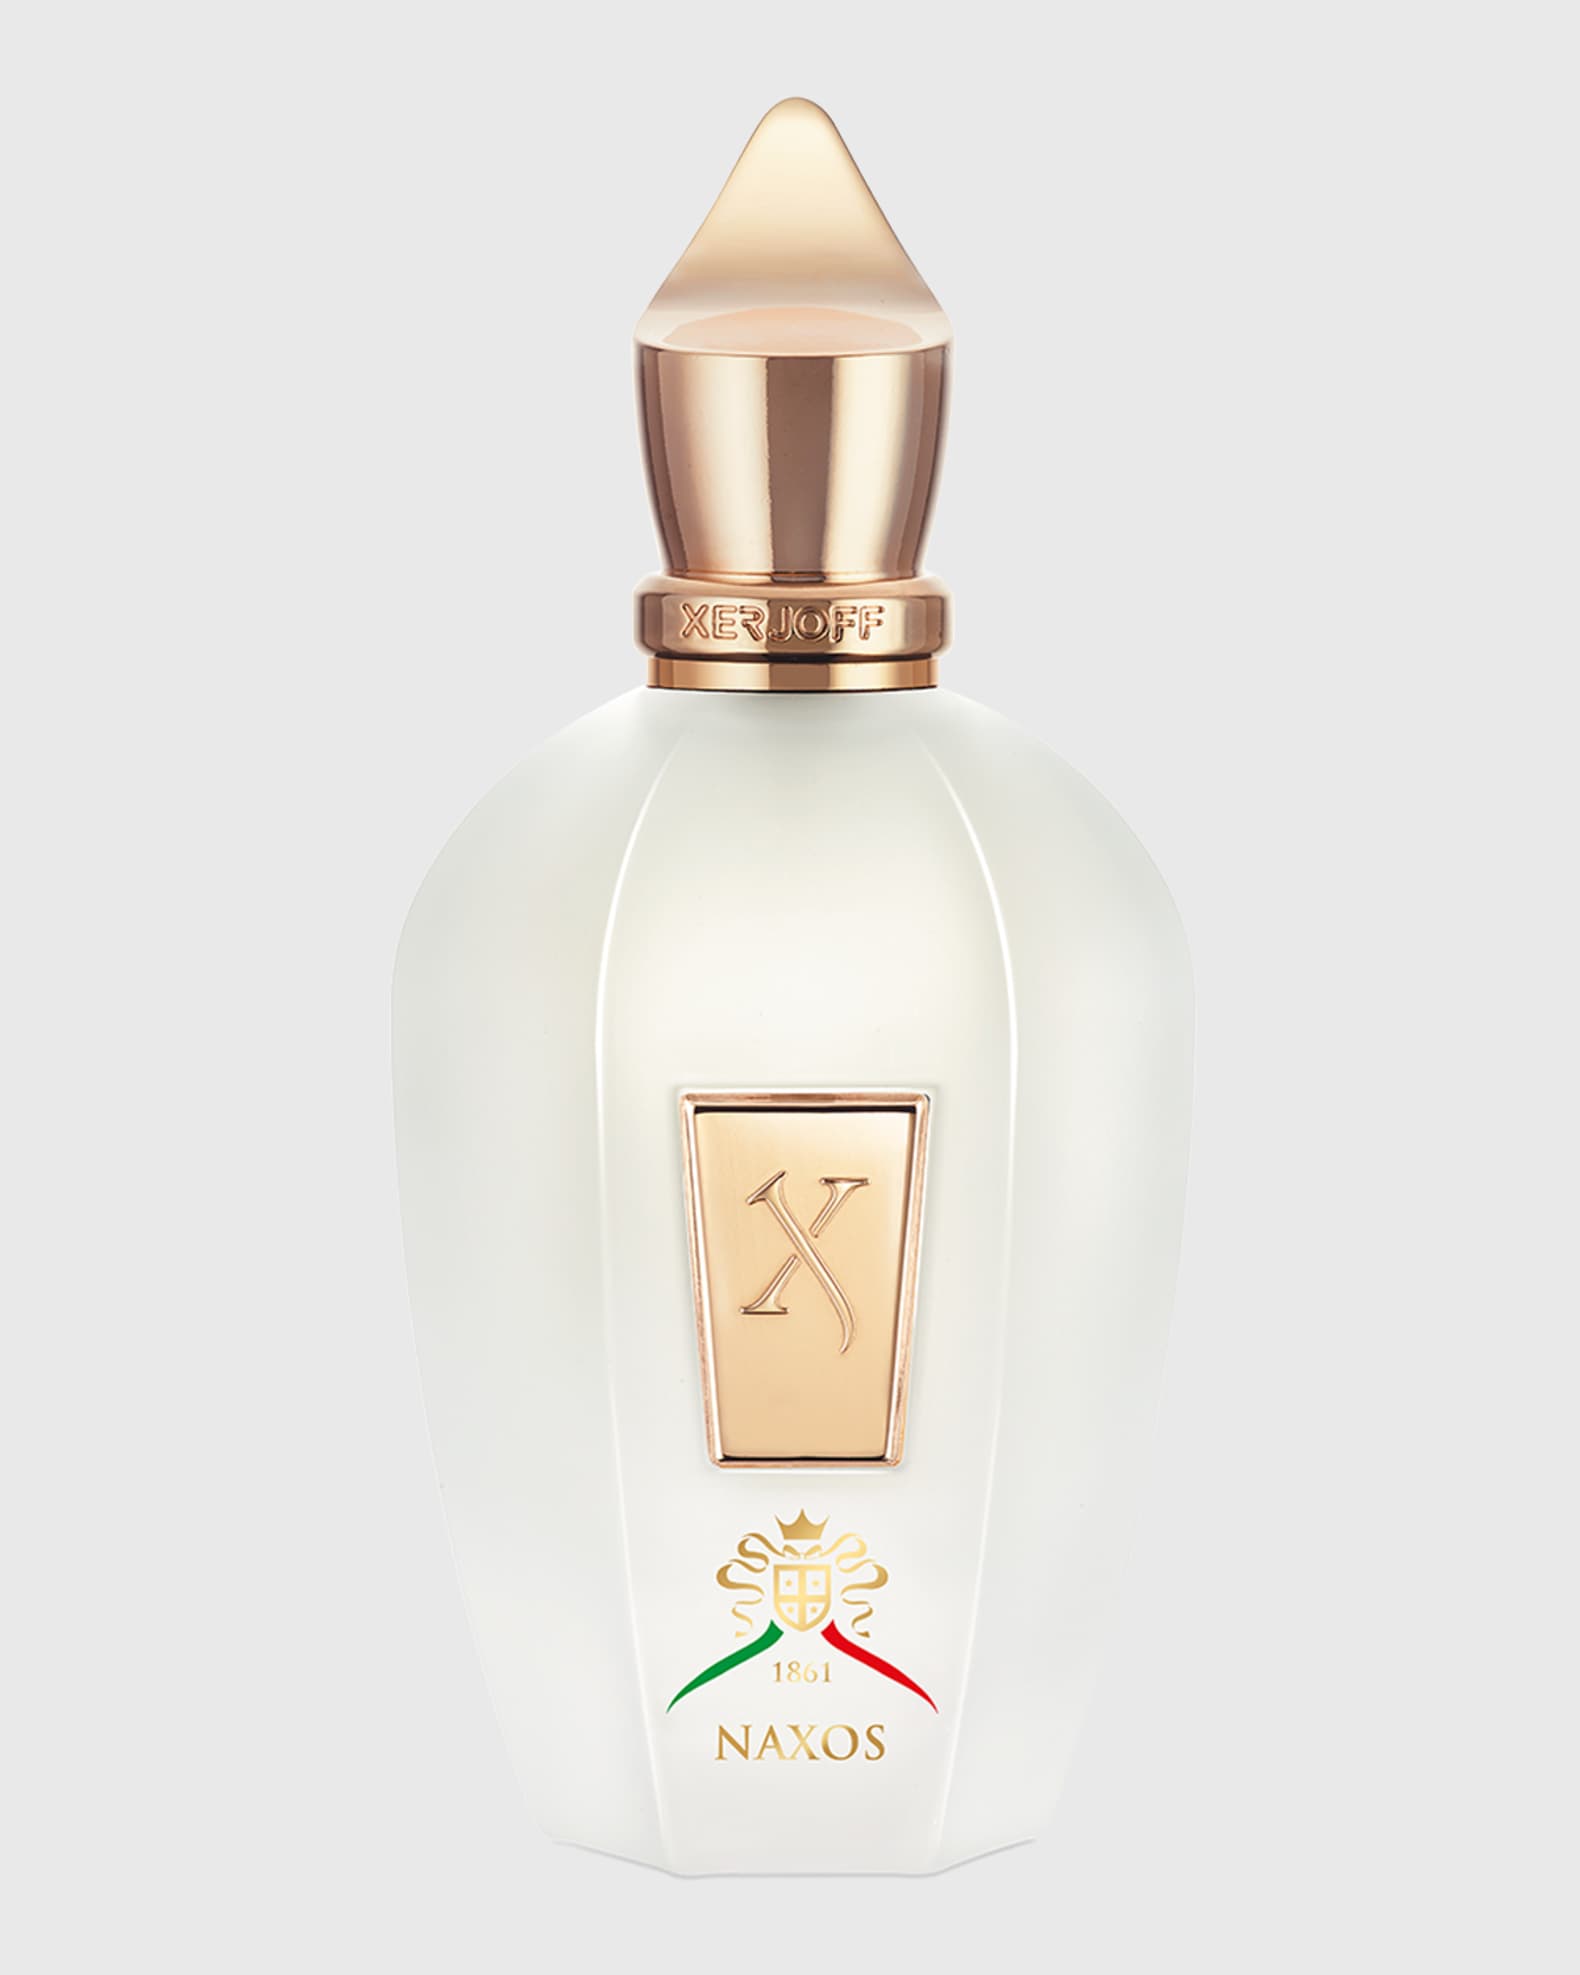 XJ 1861 Naxos Eau de Parfum Spray (Unisex) by Xerjoff 3.4 oz